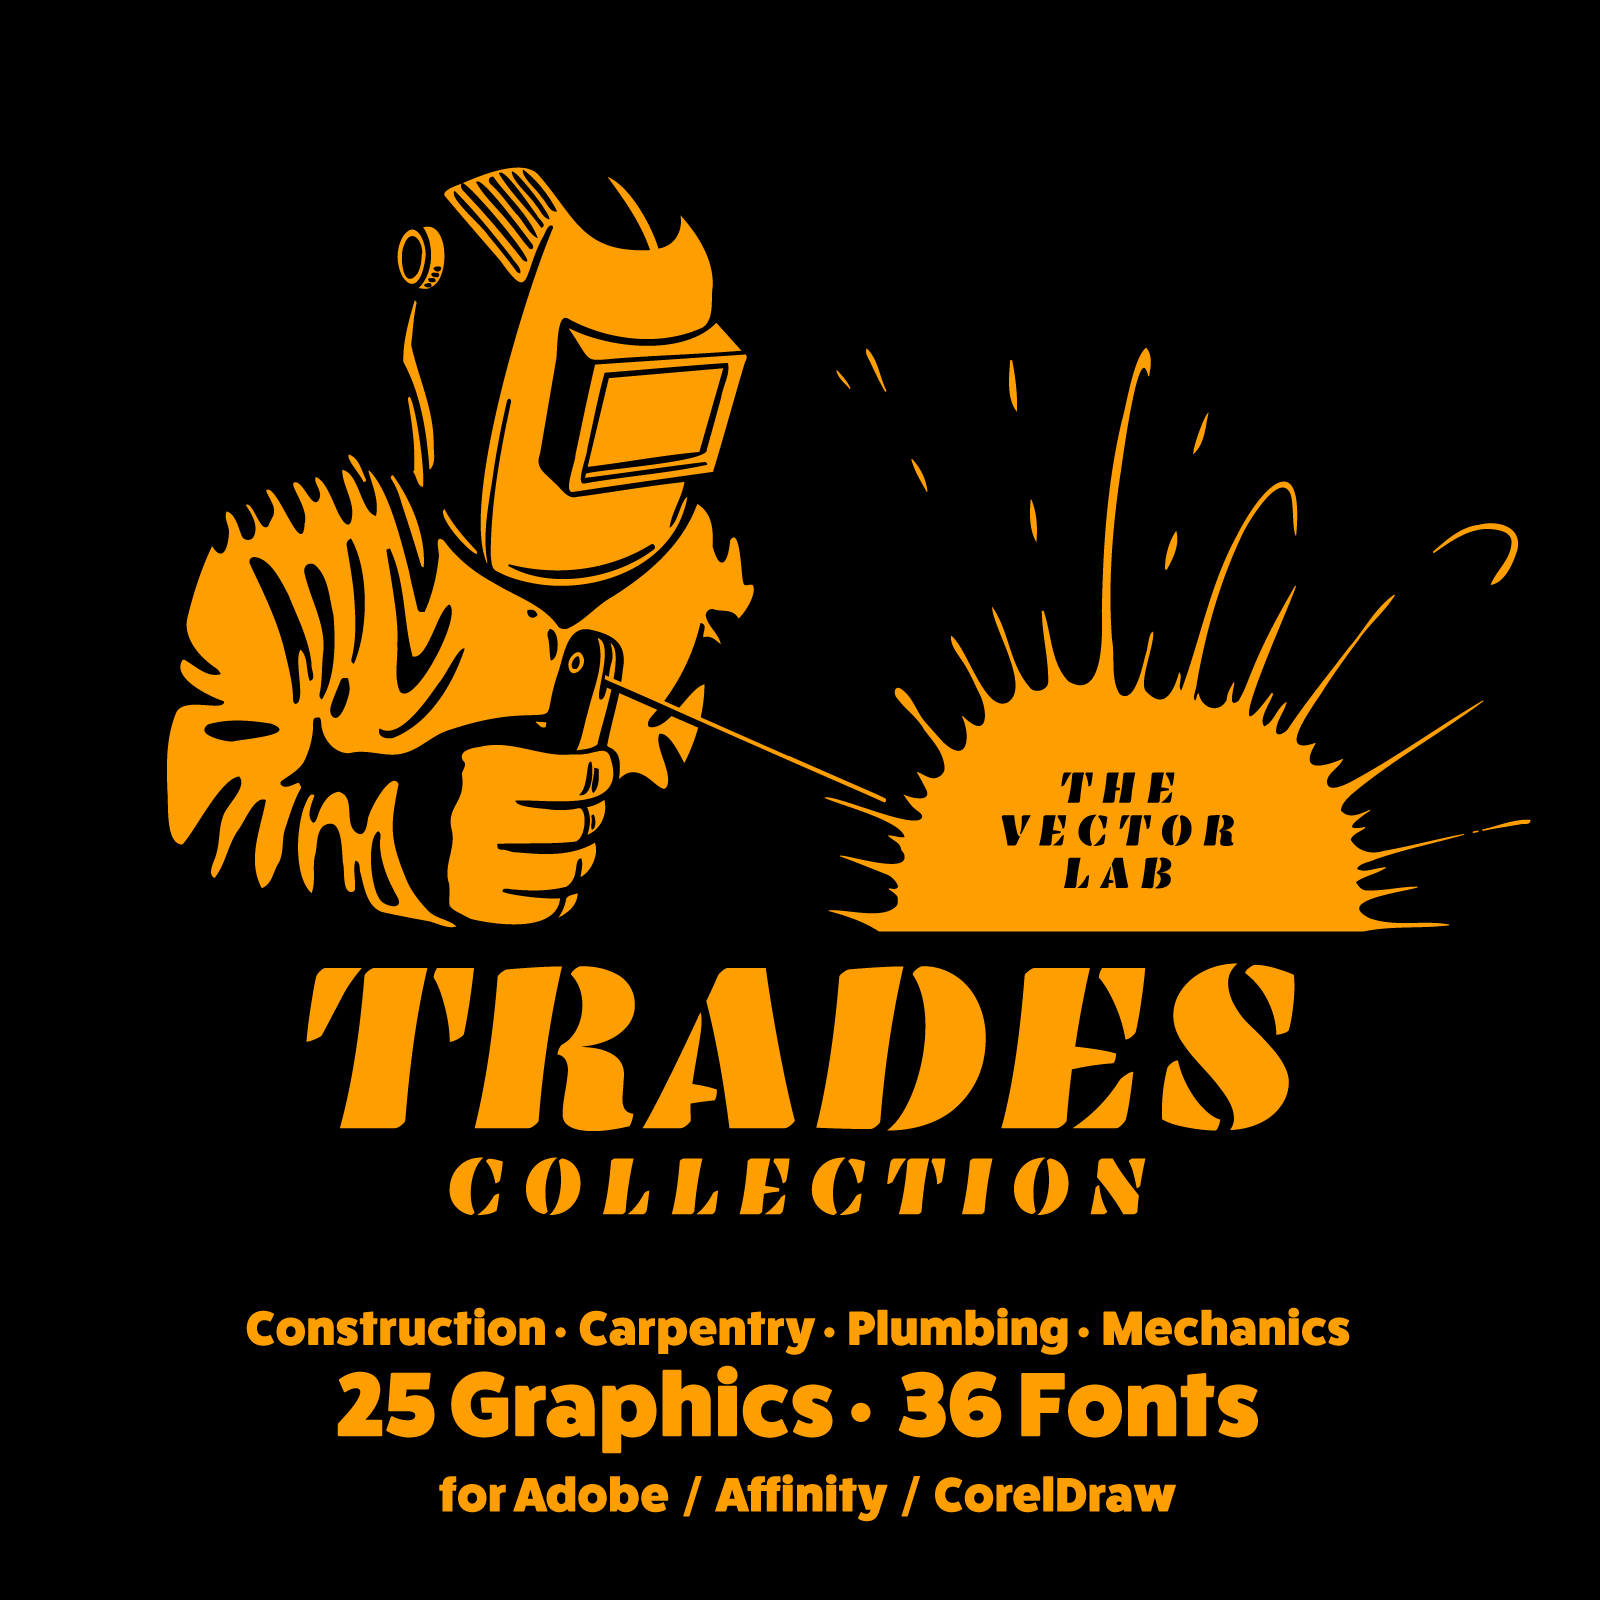 Trades graphic logo templates welding